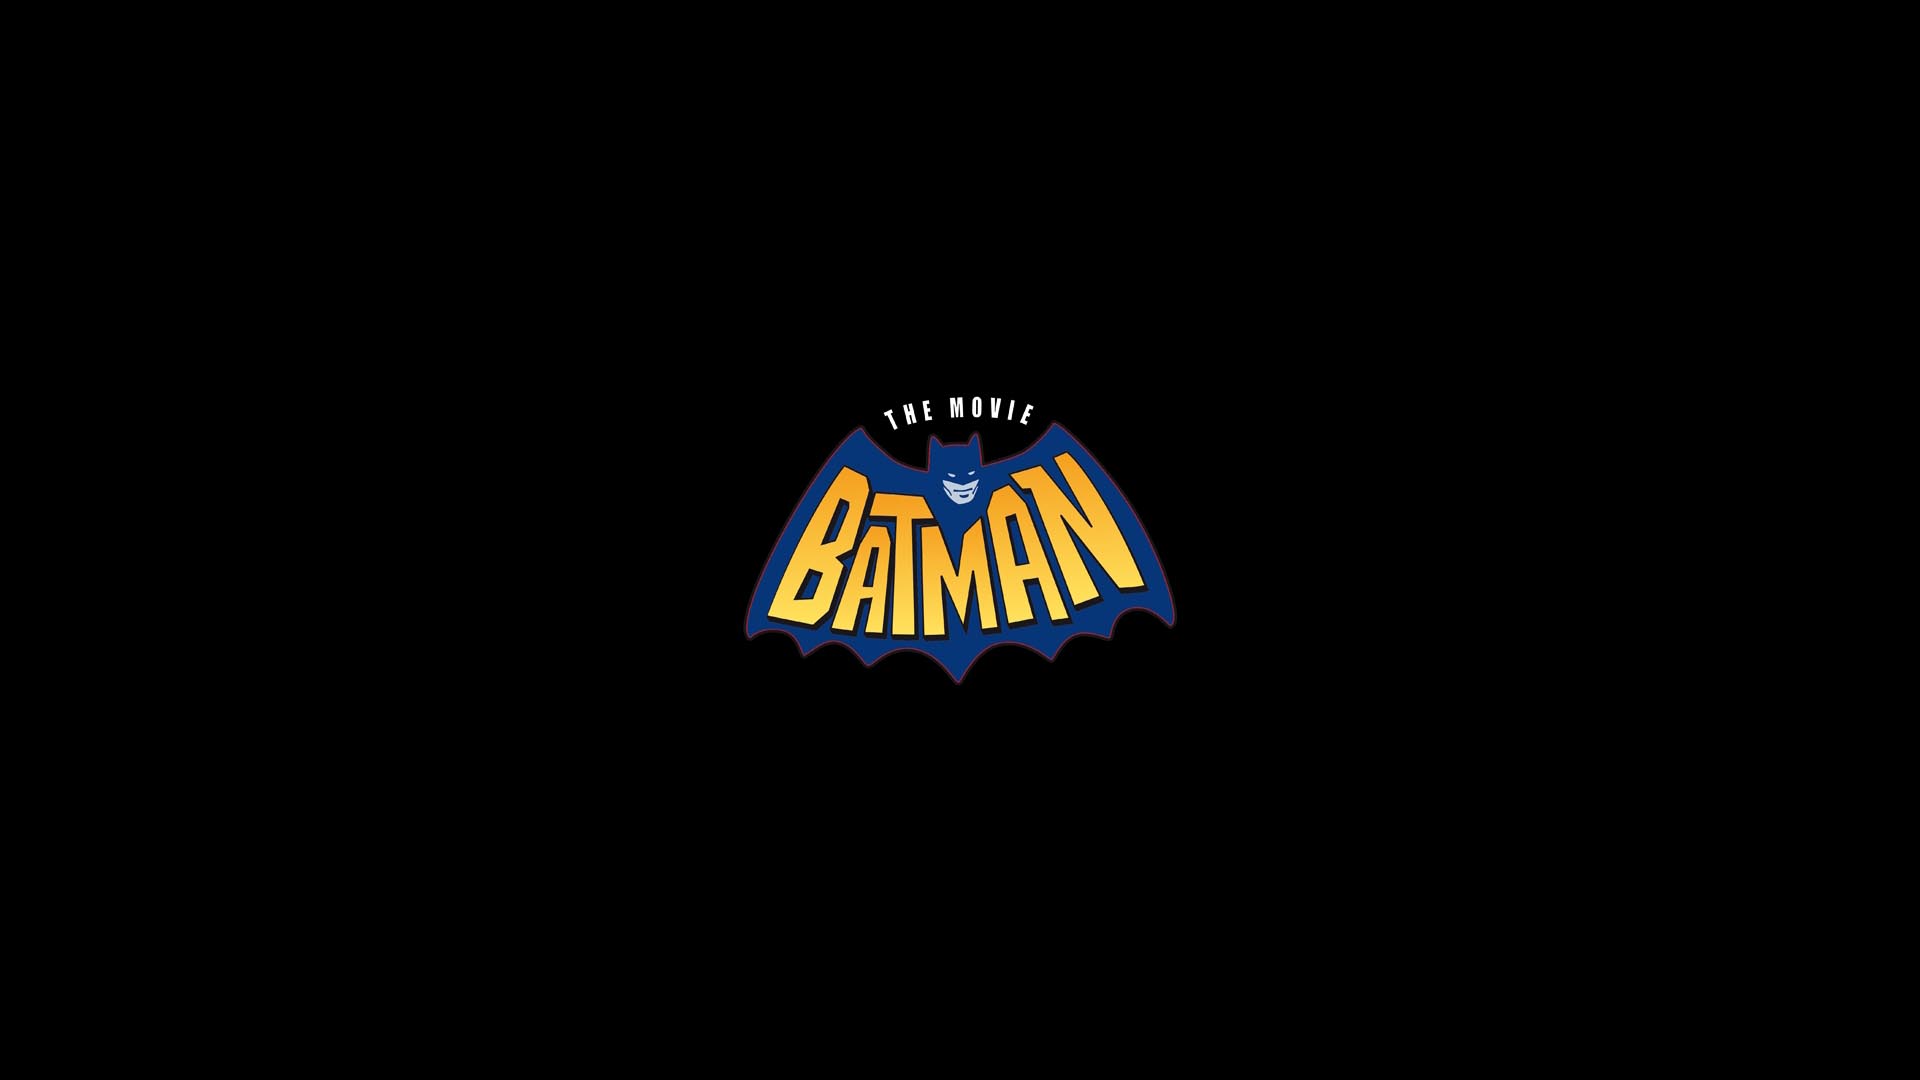 Movie Batman The Movie 1920x1080